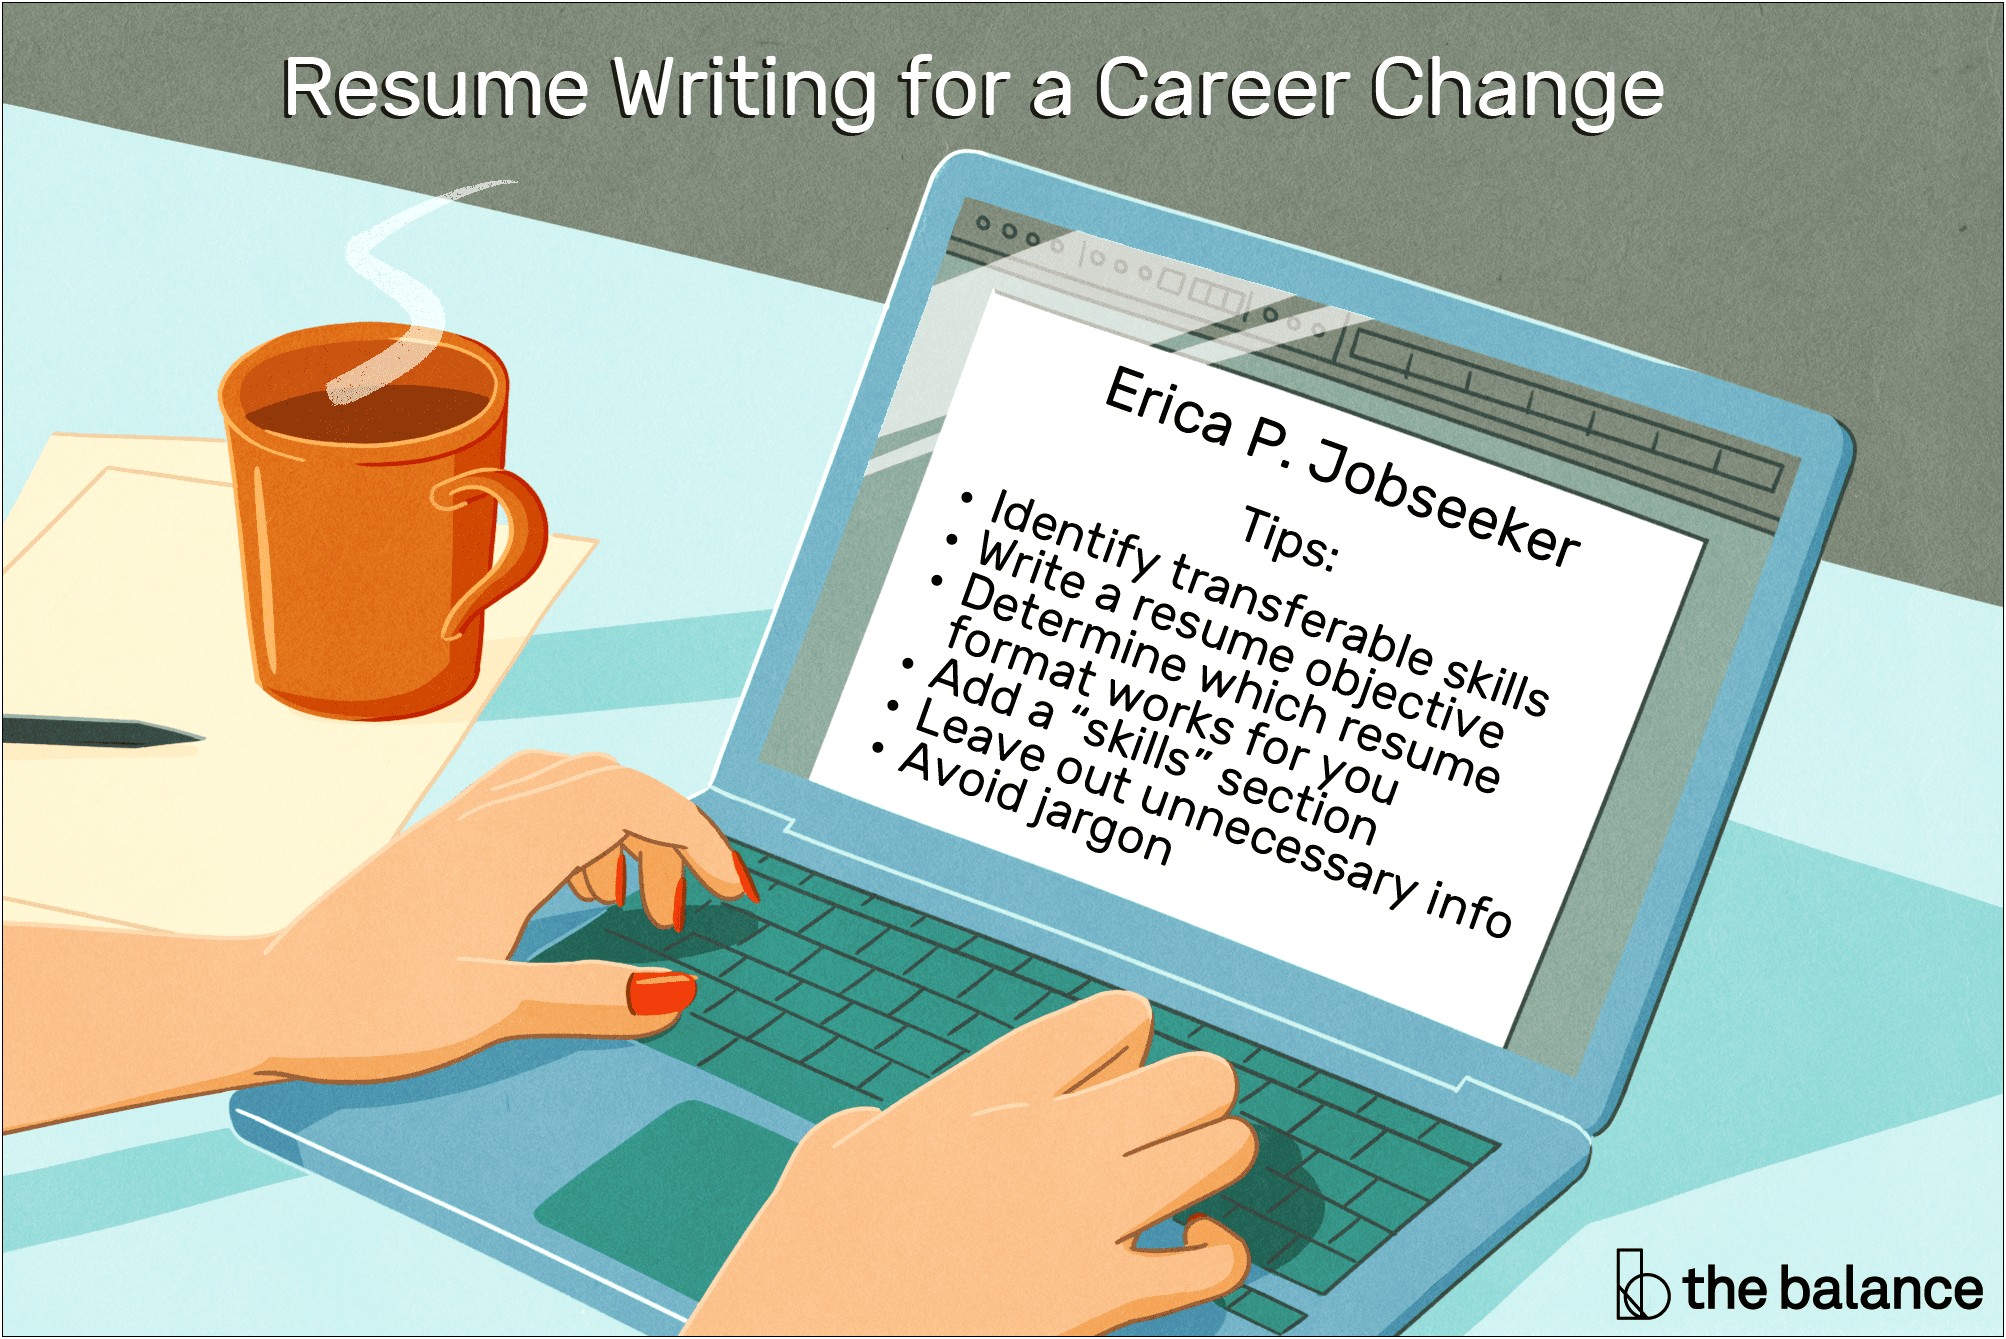 Skills And Interest To List On Resume